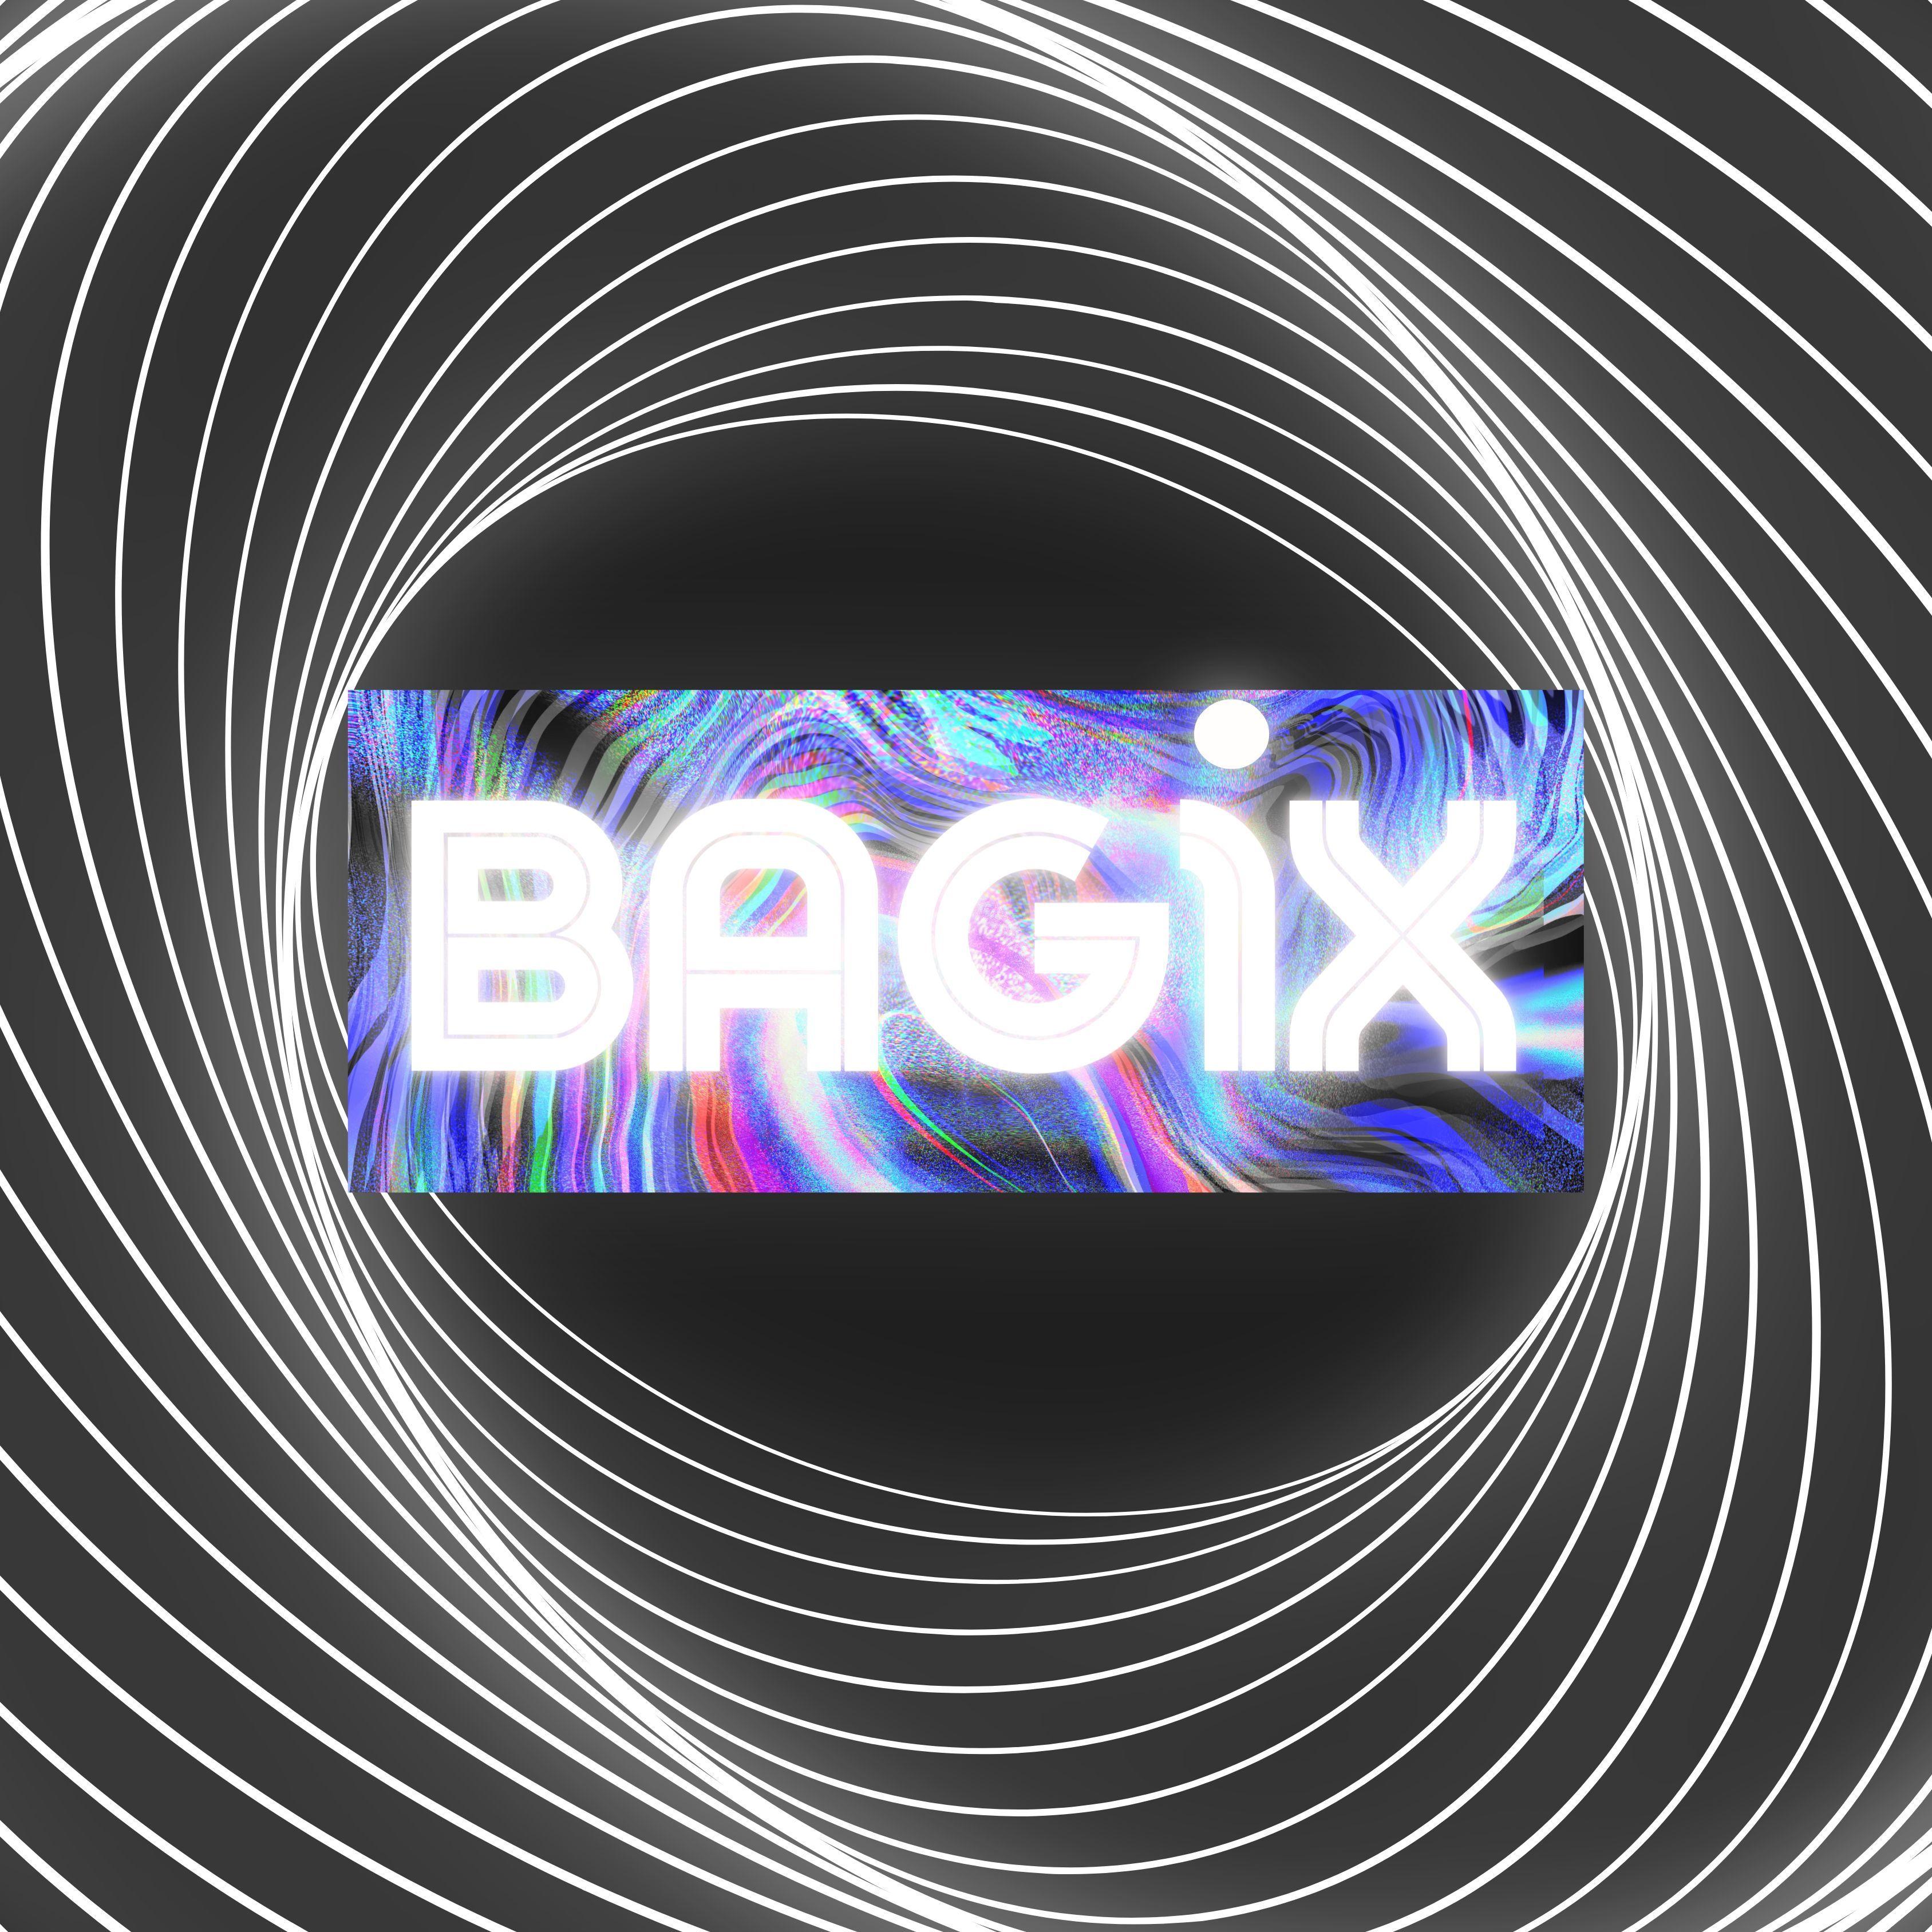 Player BAG1X avatar